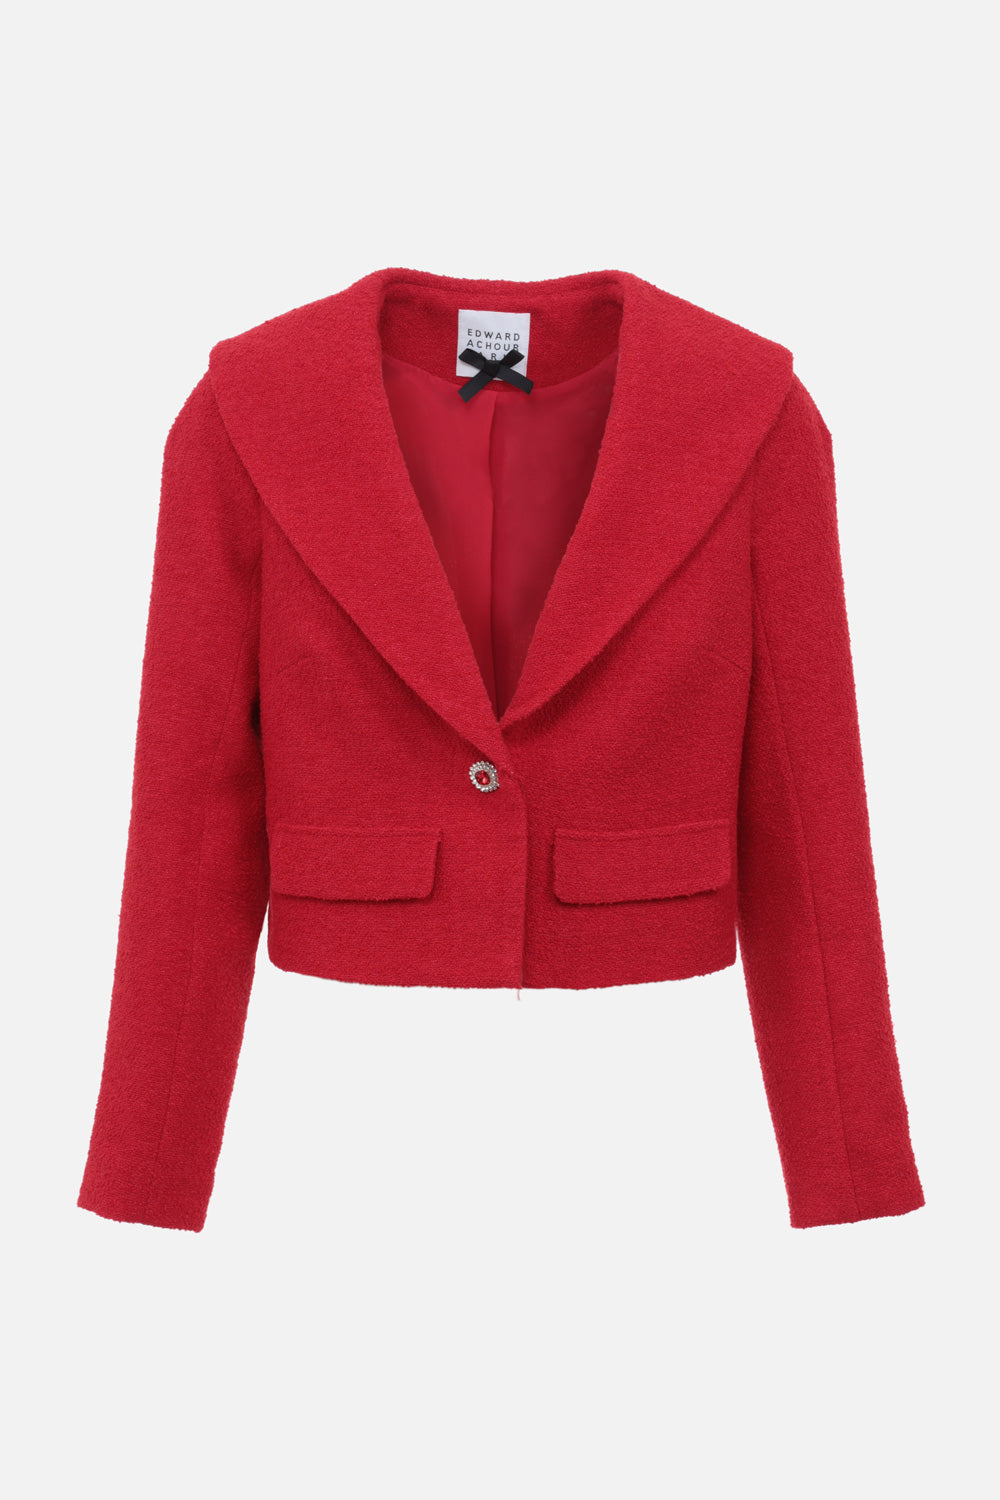 Short red suit jacket